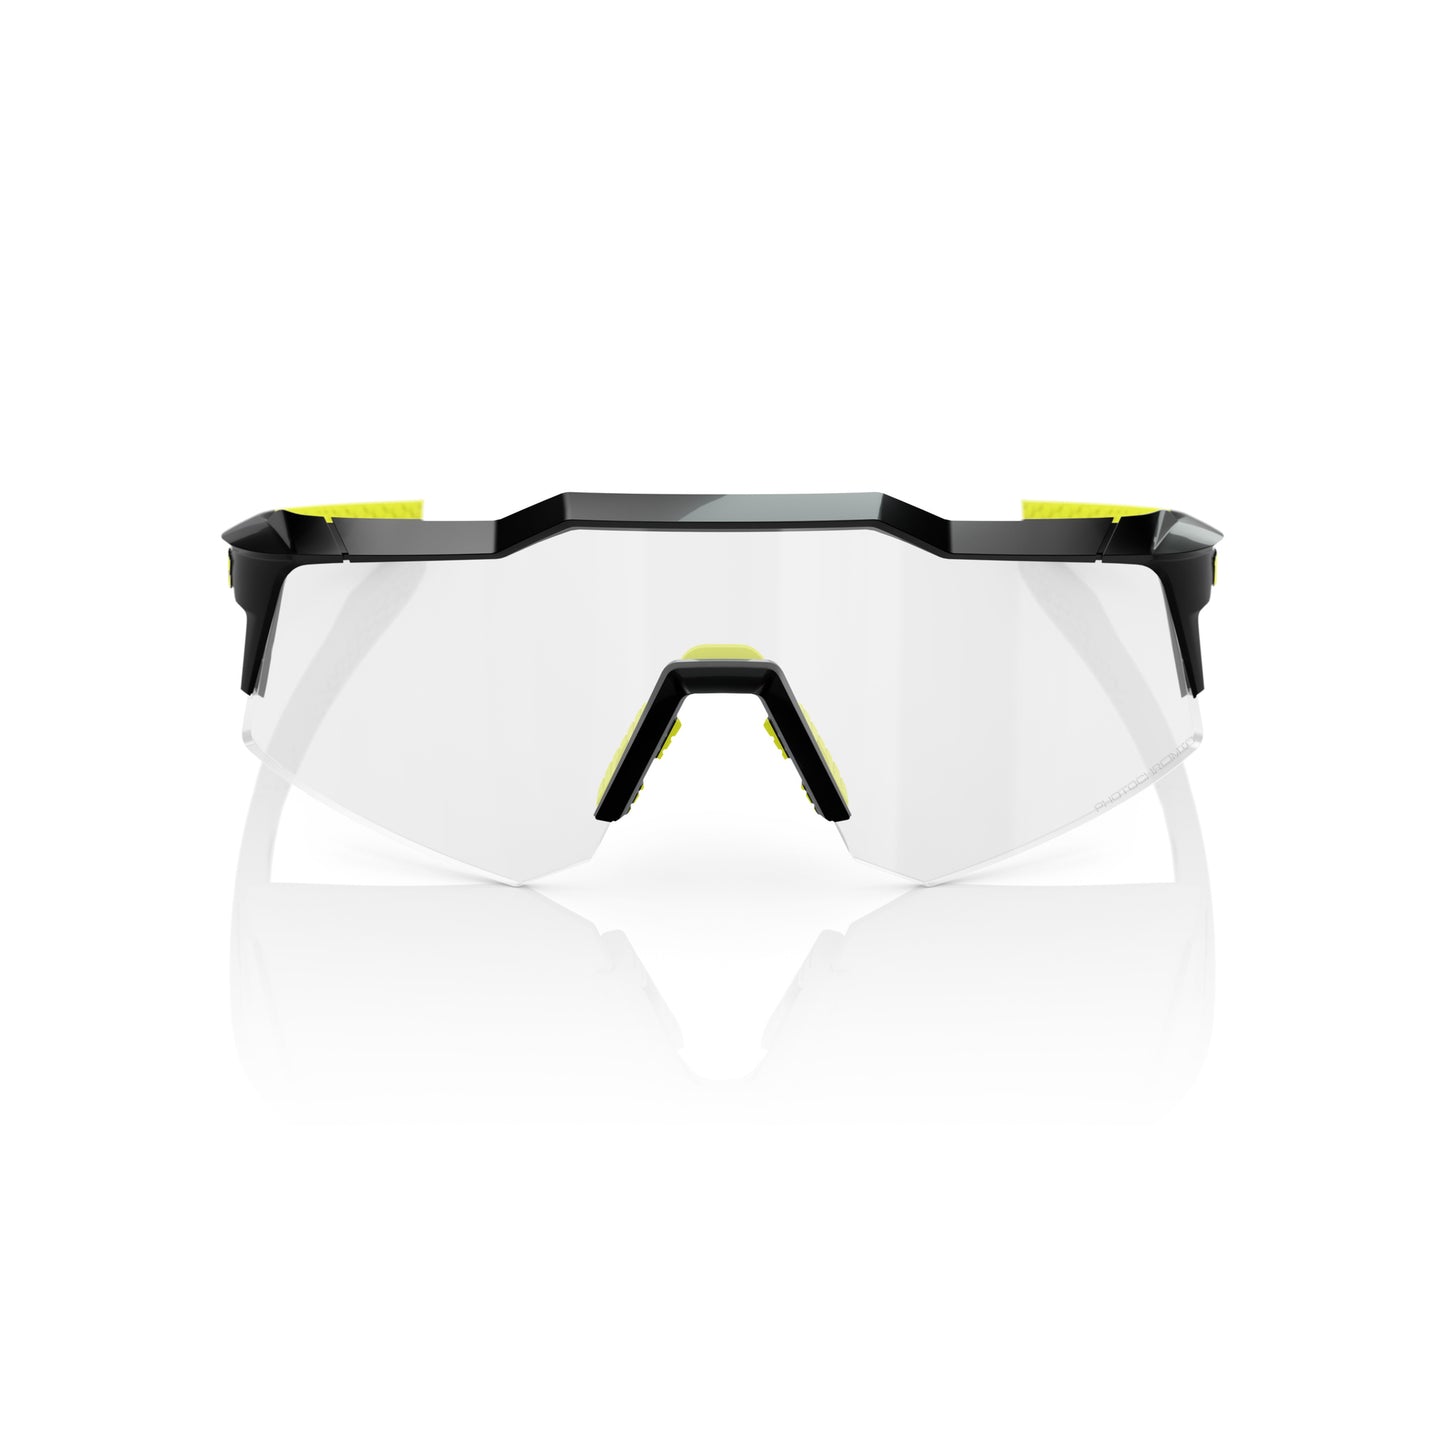 100 Percent Speedcraft XS Sunglasses - One Size Fits Most - Gloss Black - Photochromic Lens